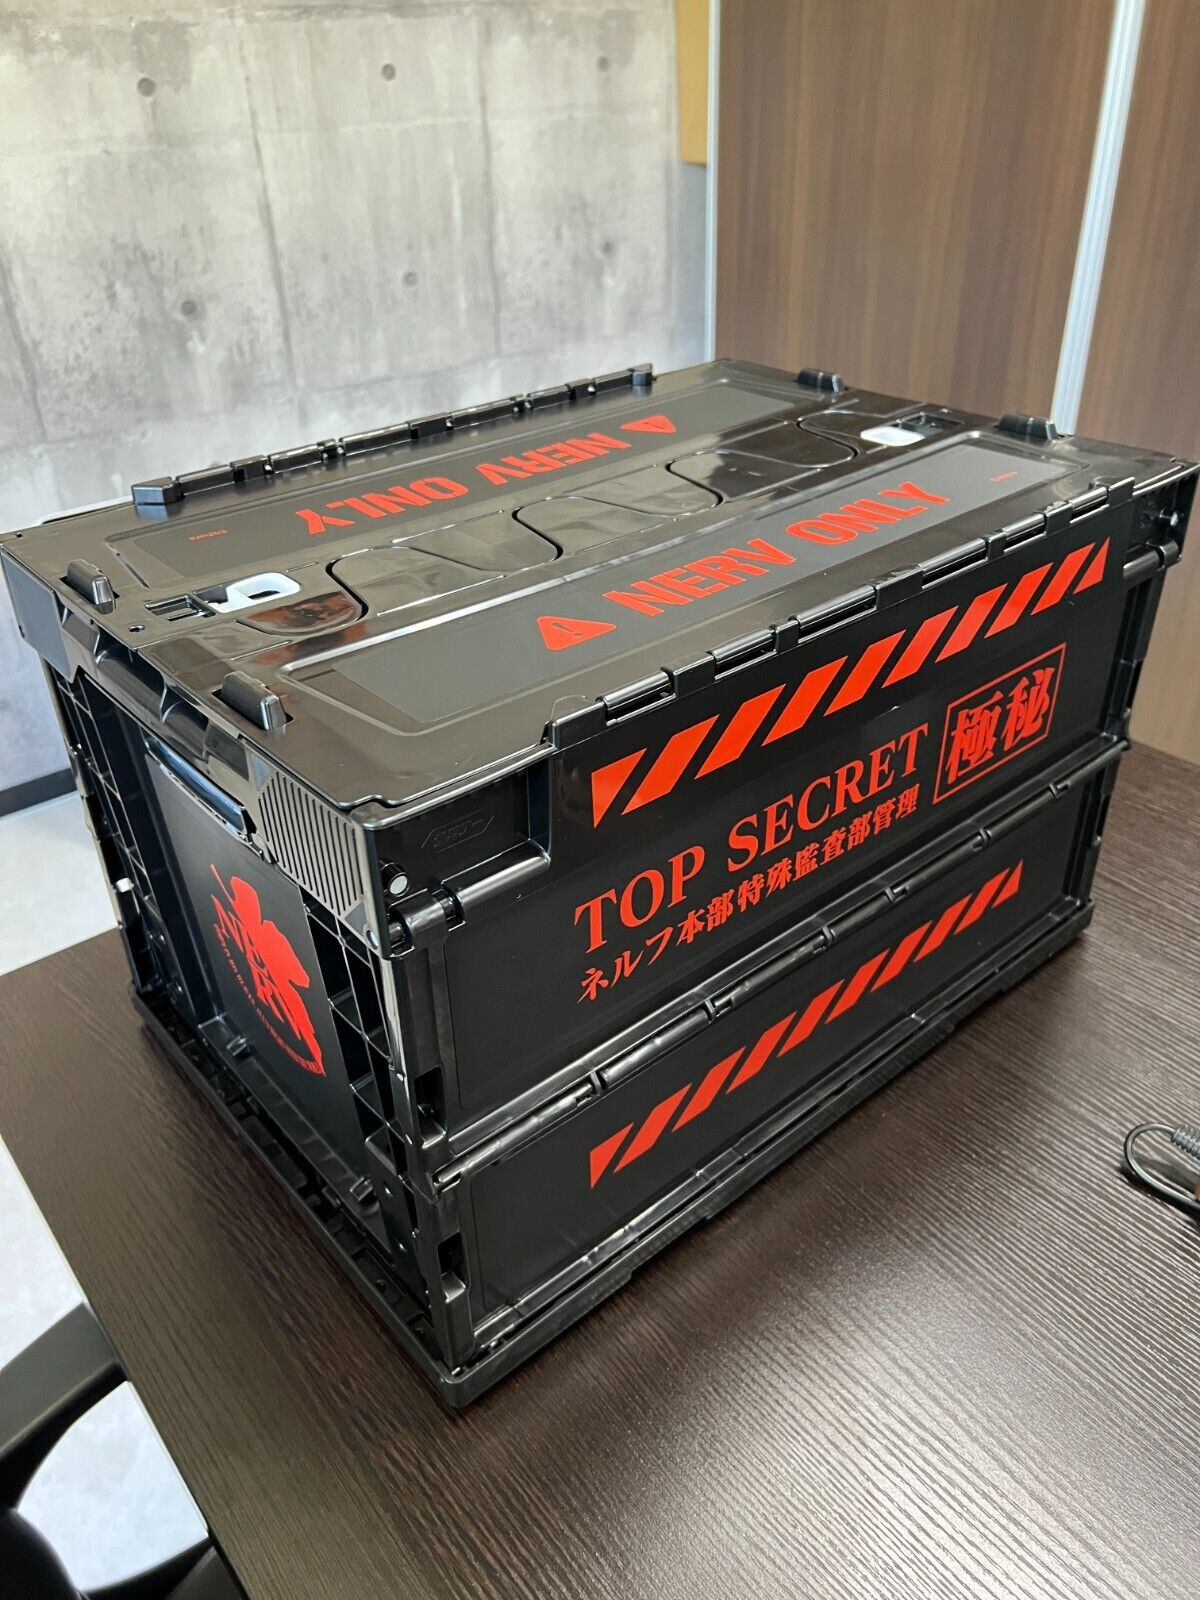 NERV Evangelion Large Storage Box Top Secret Folding Container 50.1L From Japan